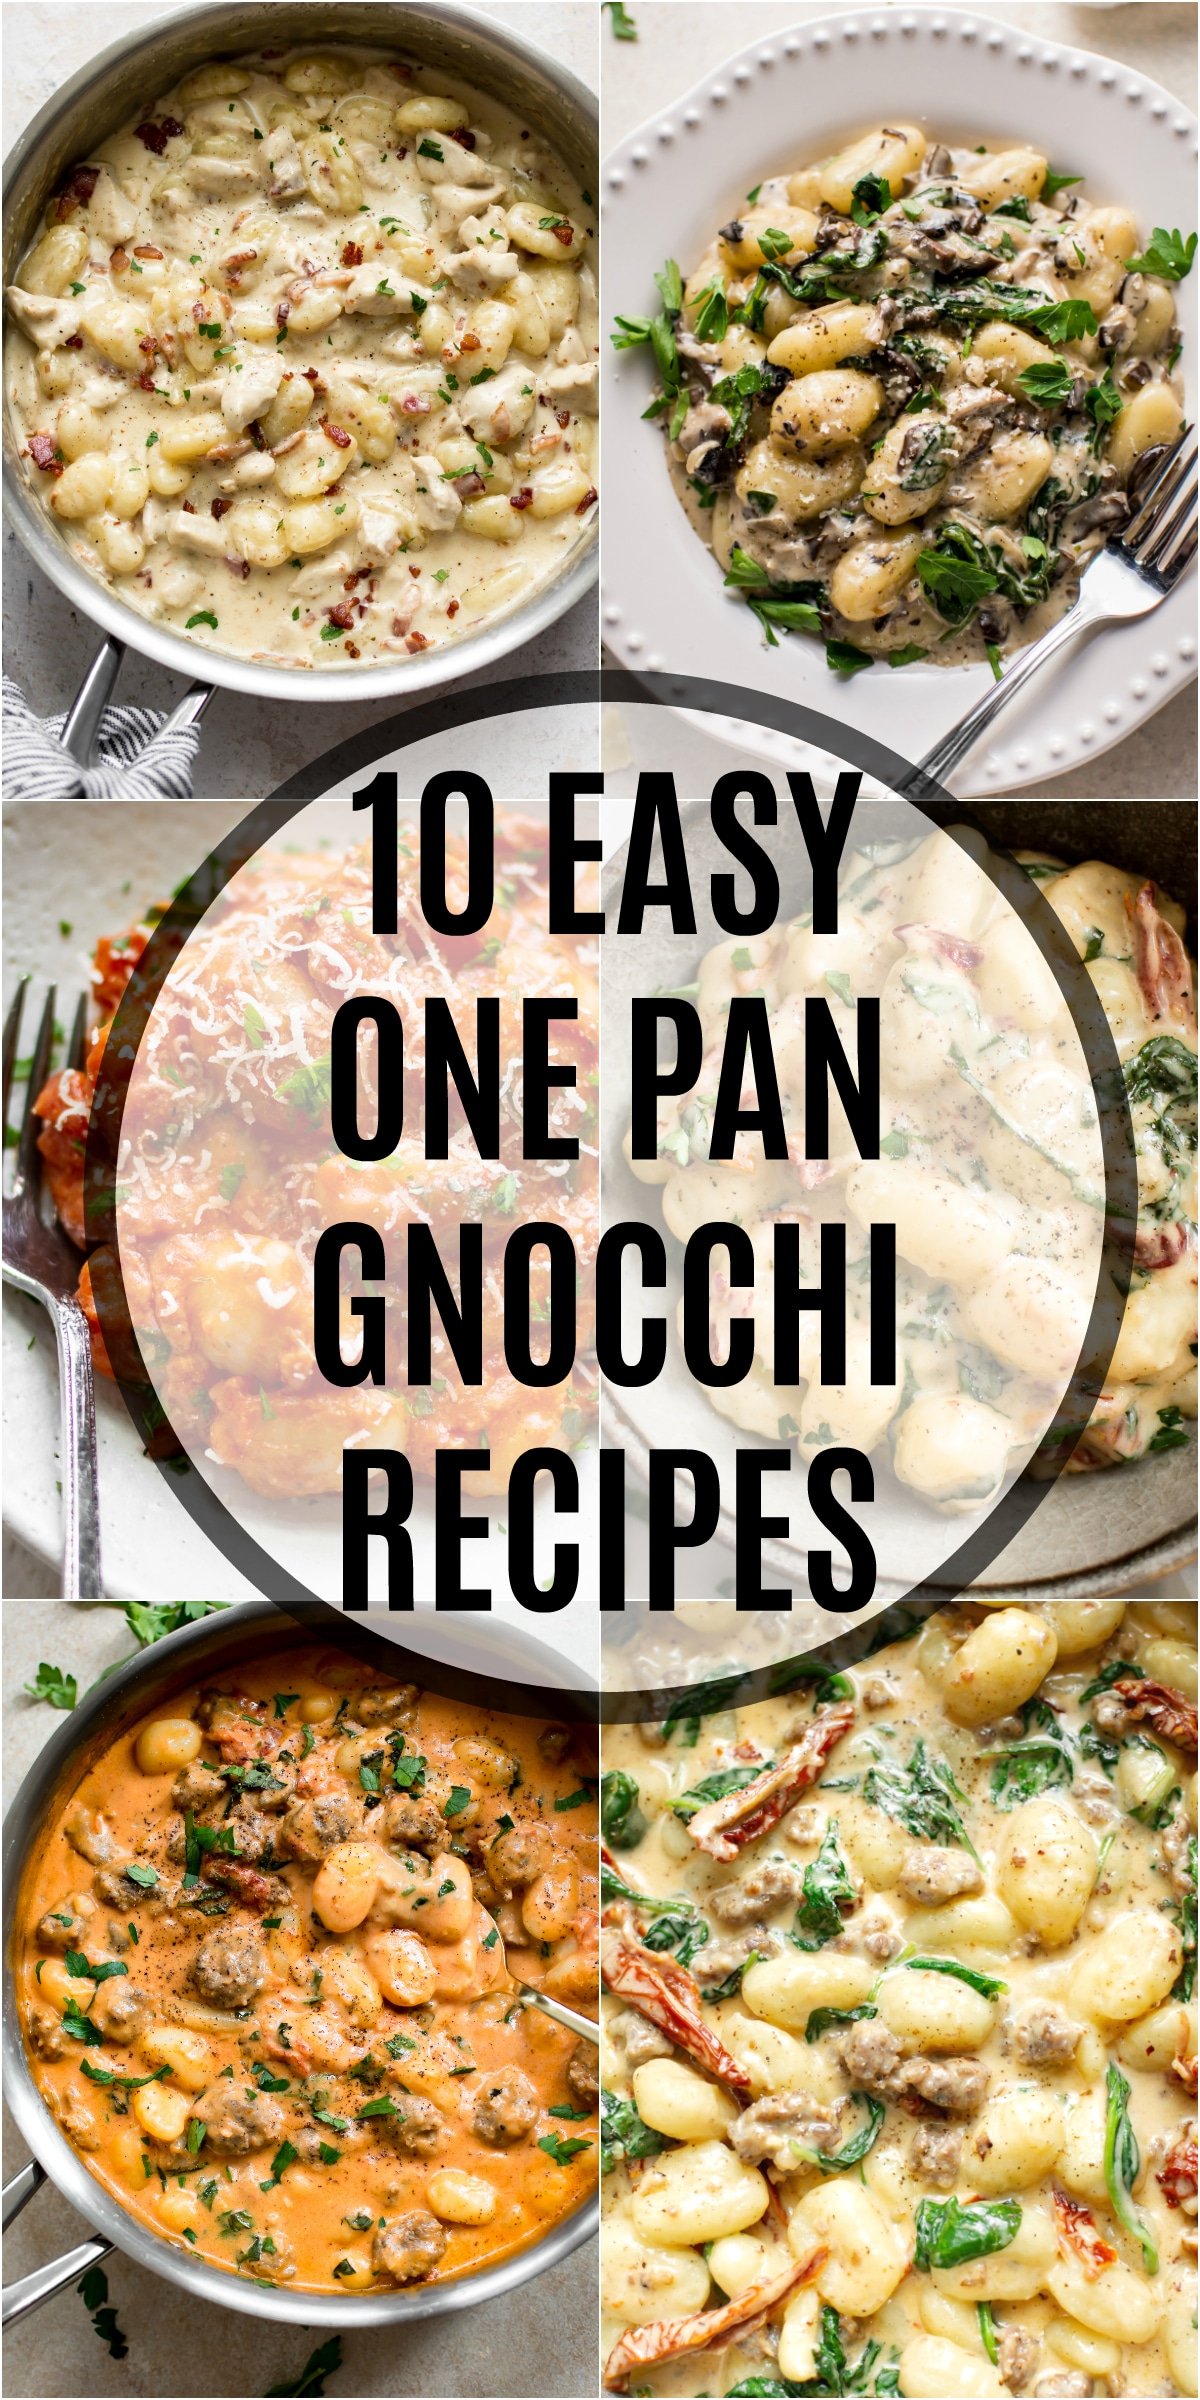 https://www.saltandlavender.com/wp-content/uploads/2019/09/10-easy-gnocchi-recipes-pin.jpg